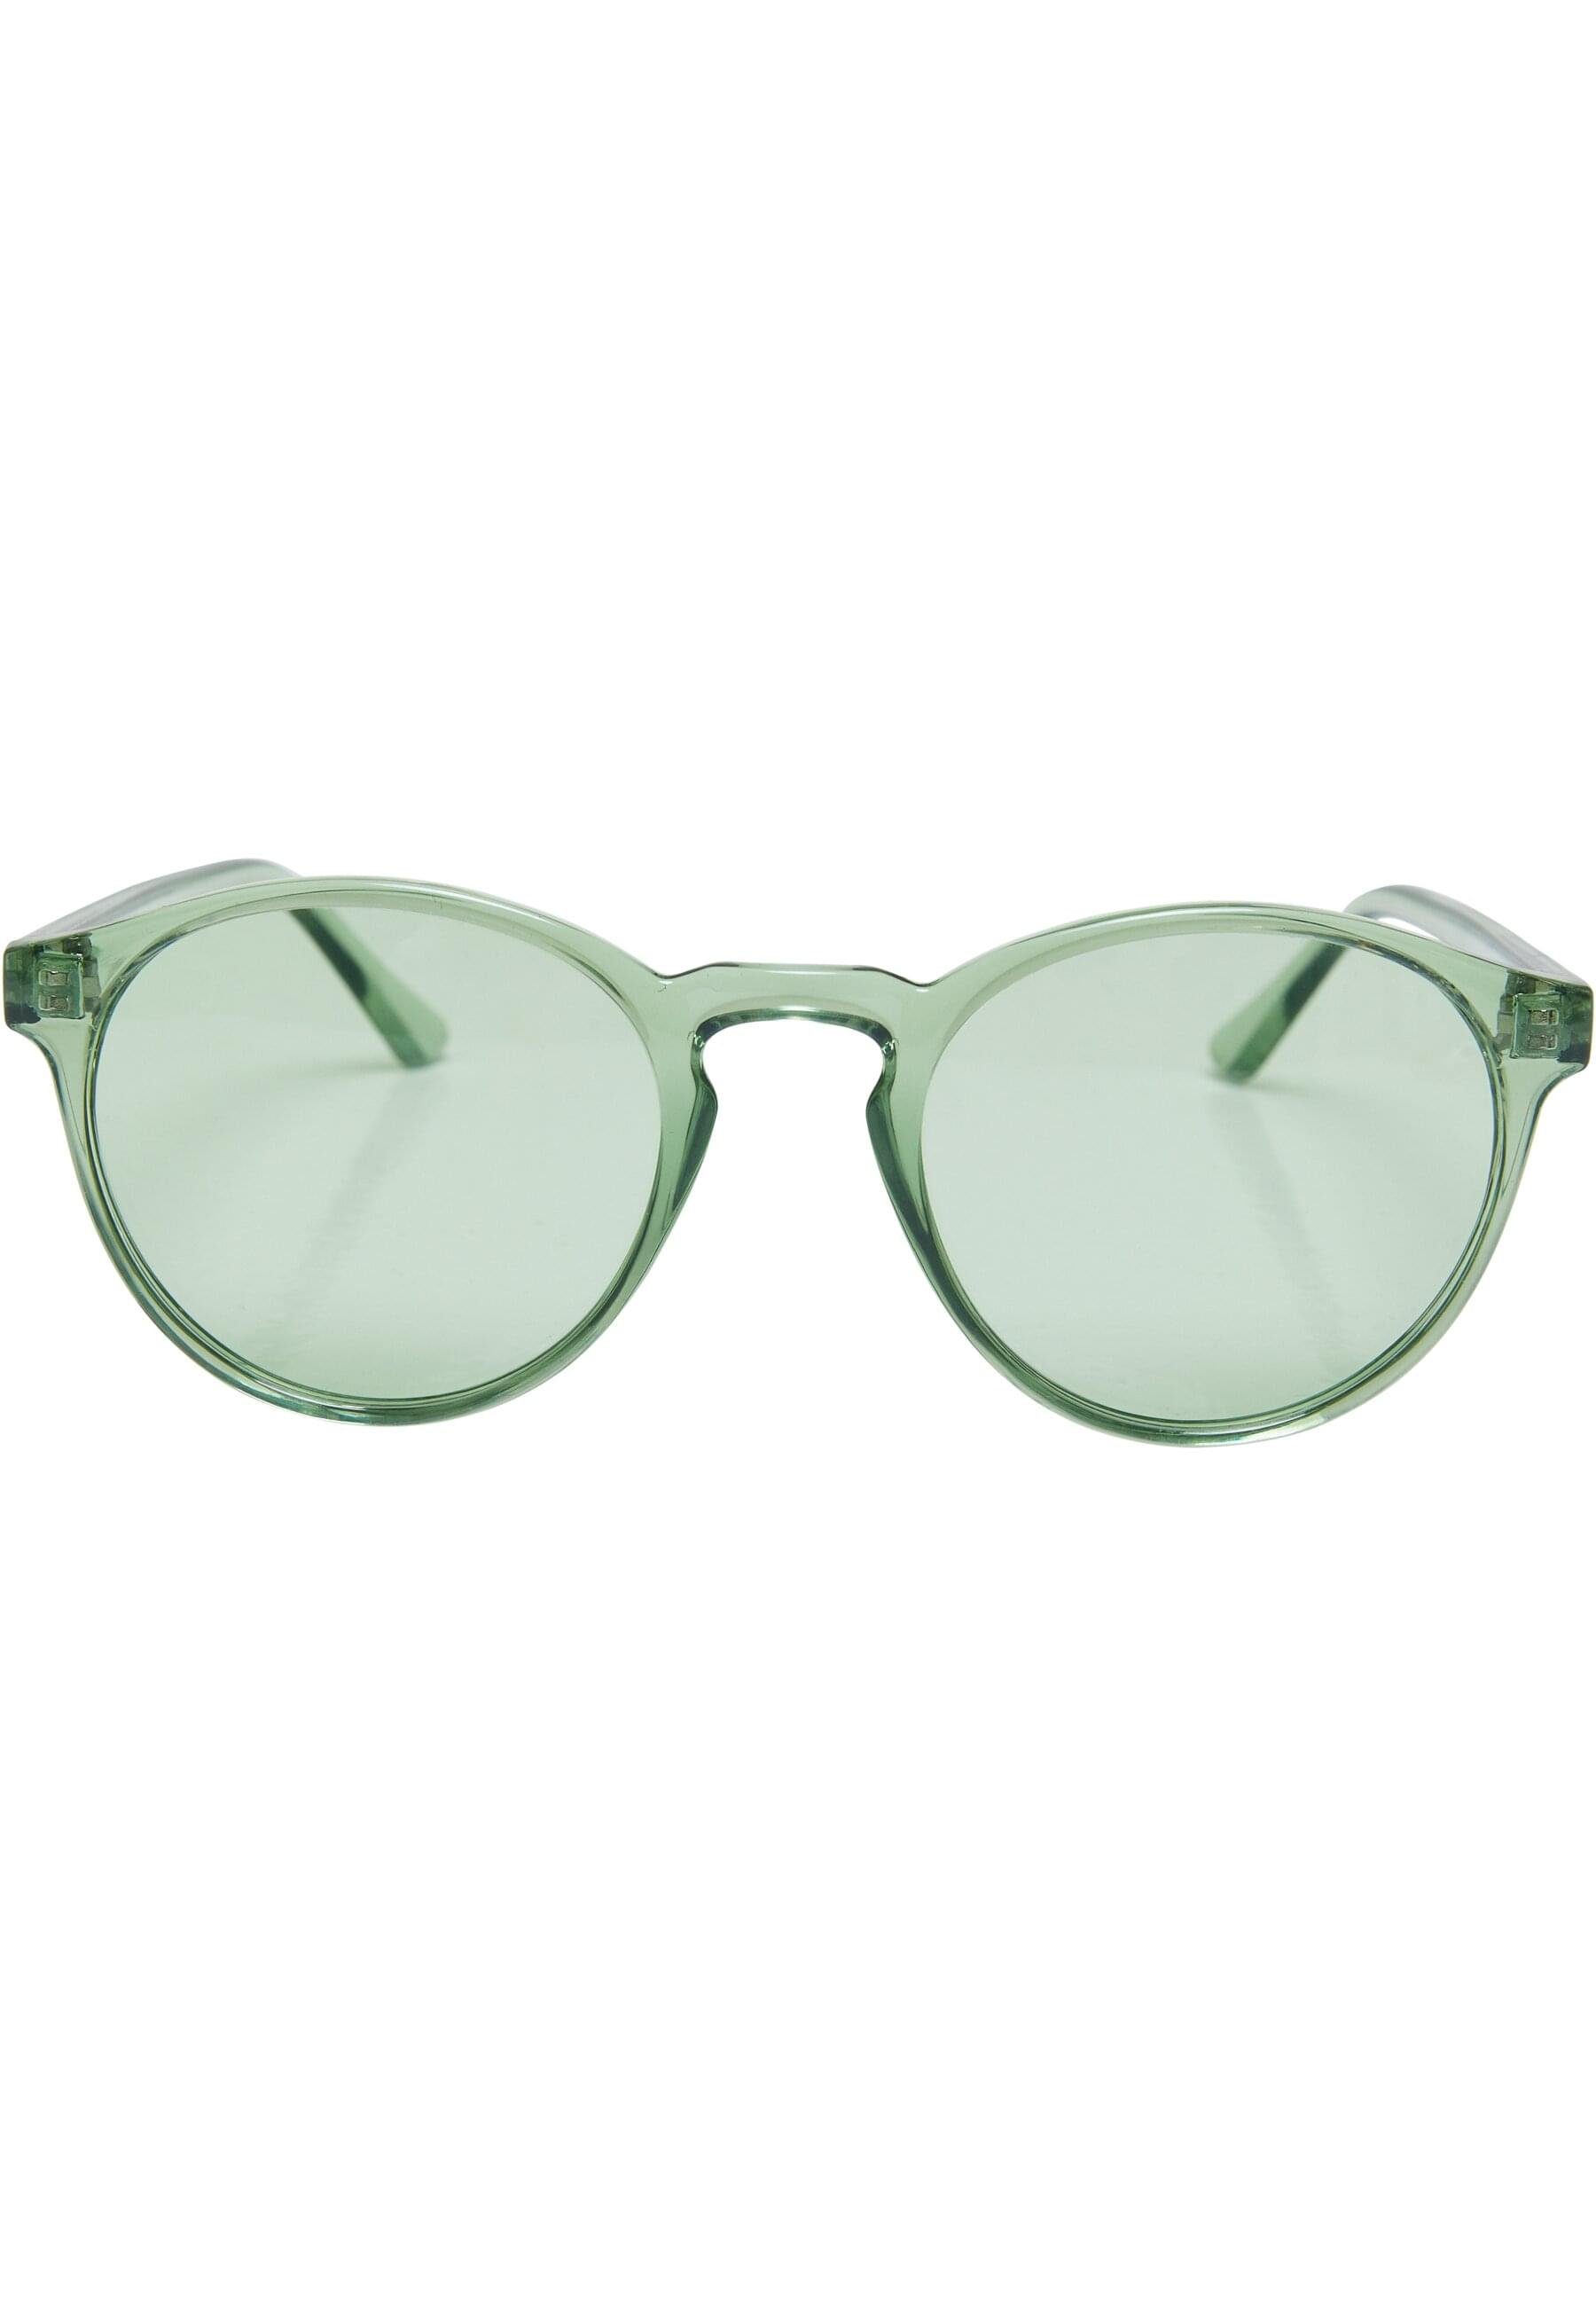 URBAN black/palepink/vintagegreen Sunglasses Cypress Unisex CLASSICS 3-Pack Sonnenbrille